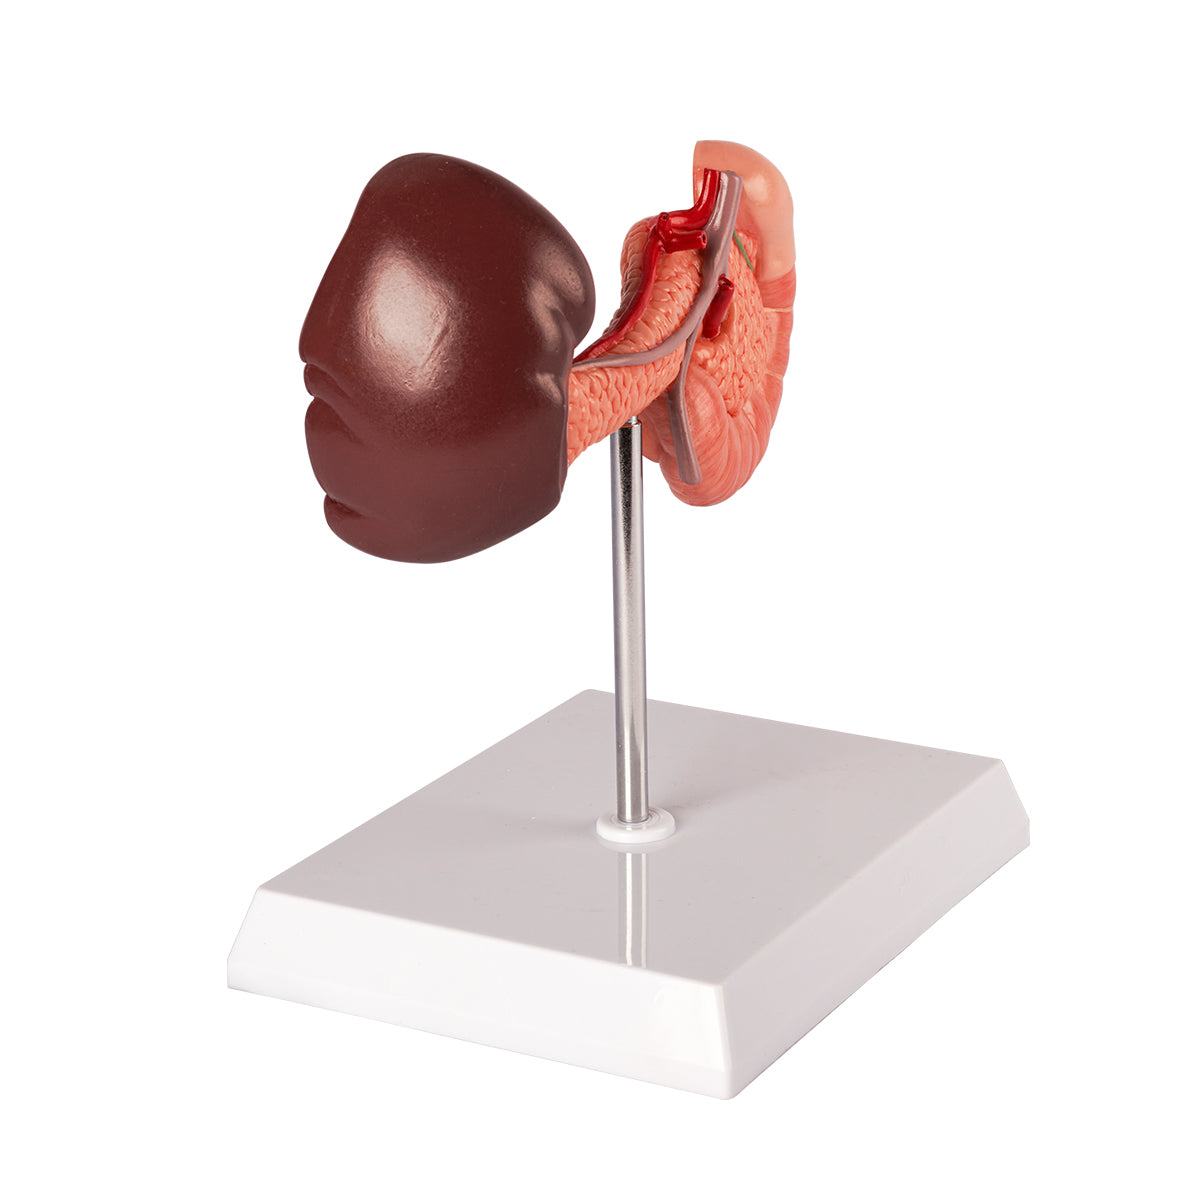 Evotech Scientific Rear Organs of Upper Abdomen, Life Size, 1 Part